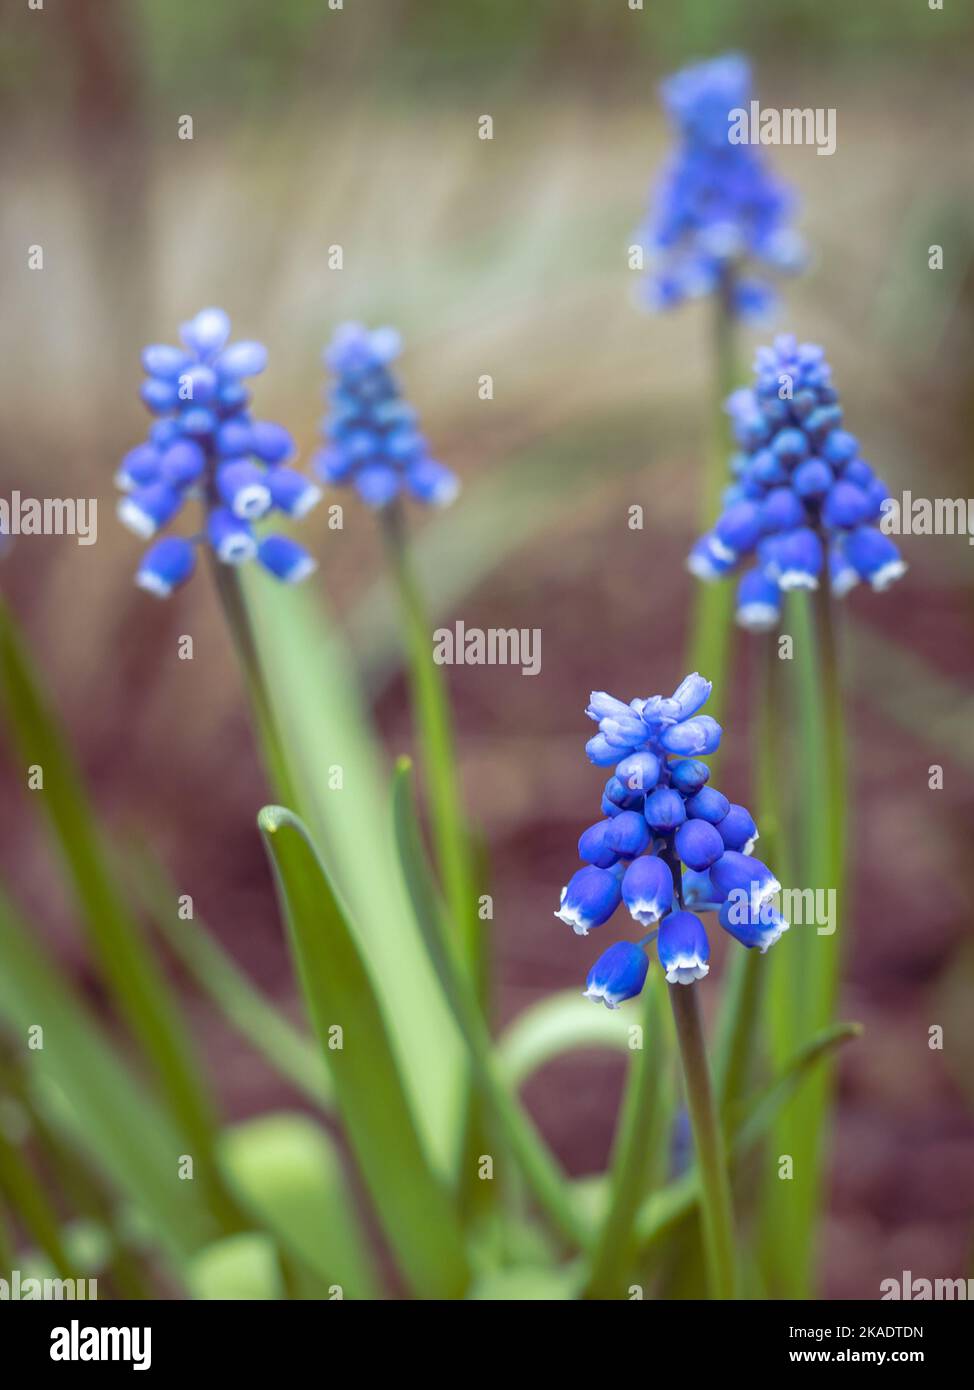 Blue muscari flowers (grape hyacinth, Muscari aucheri) blooming in the garden in the springtime. Stock Photo